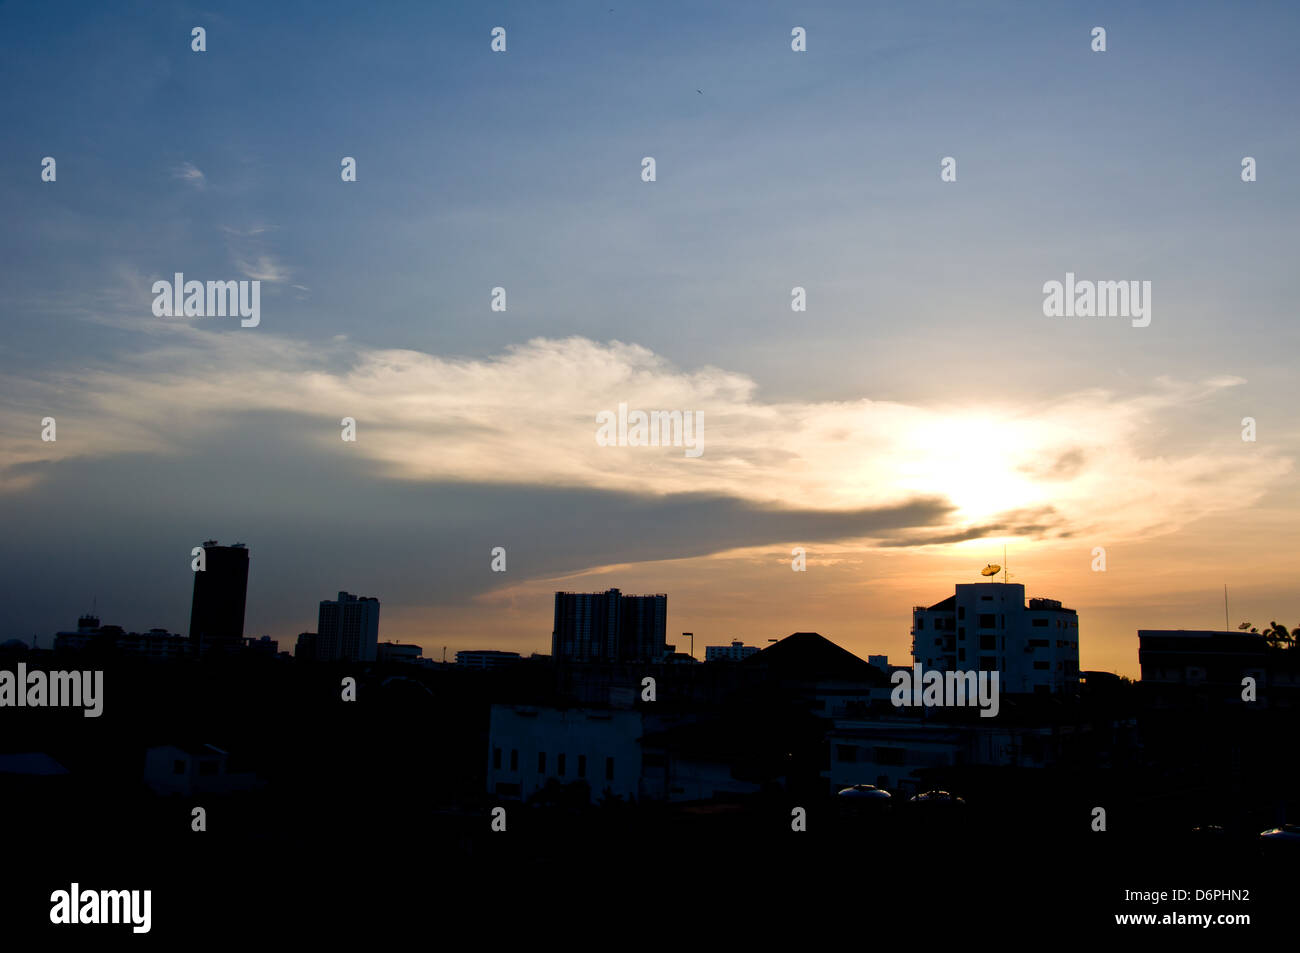 Silhouette of building before sundown Stock Photo